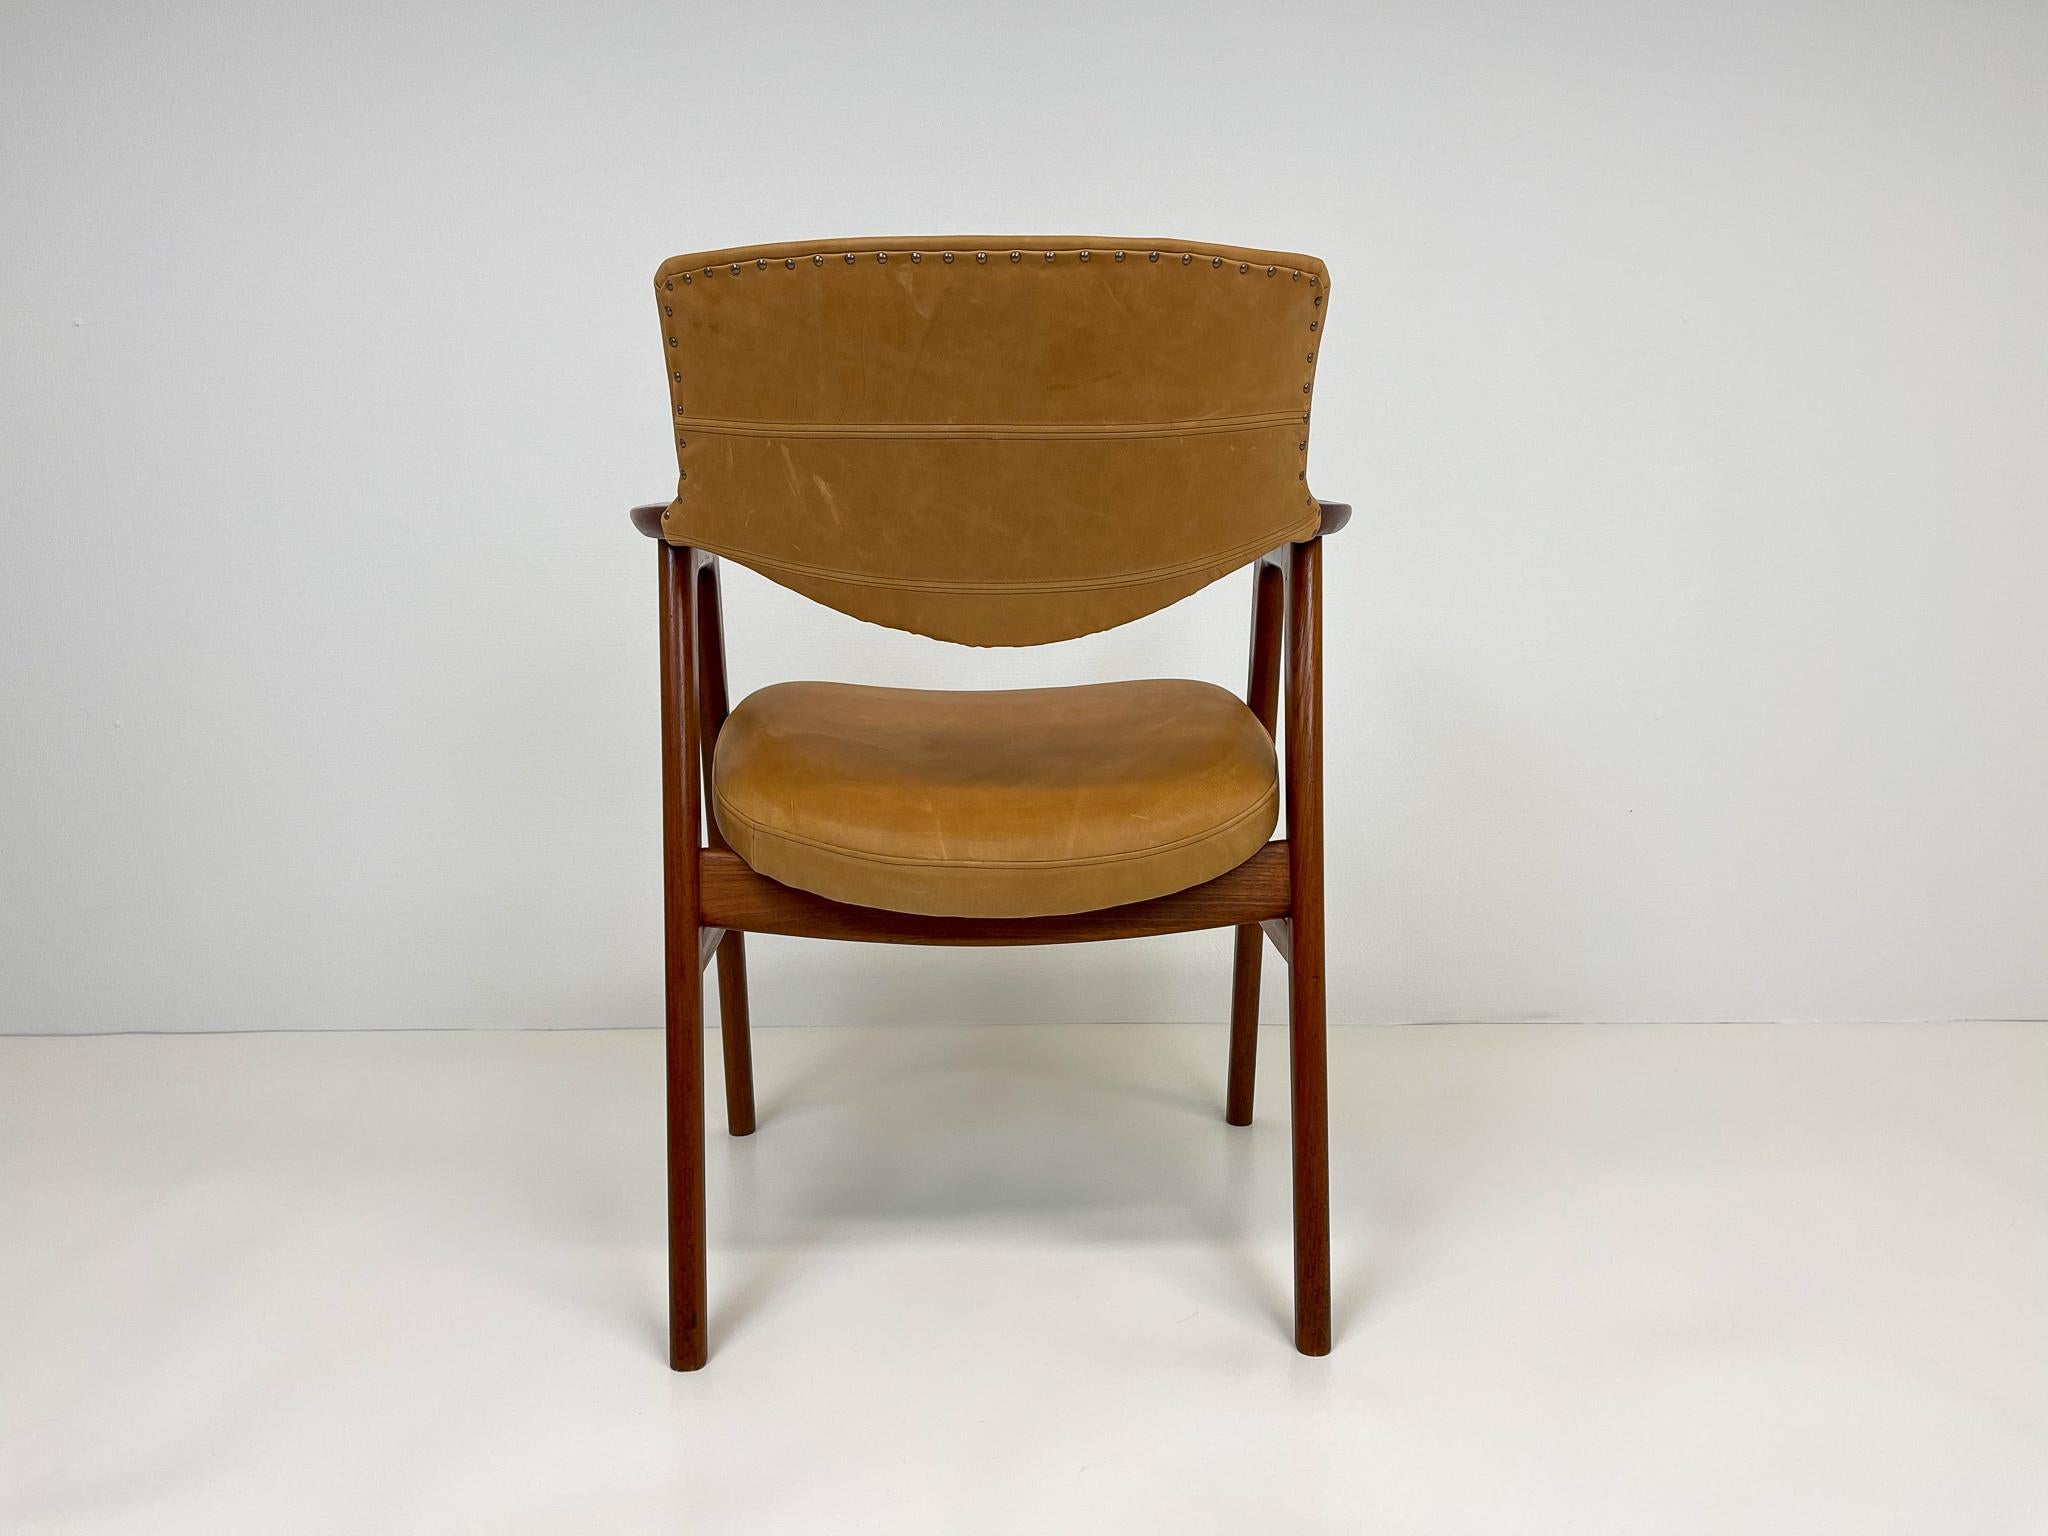 Midcentury Erik Kirkegaard Danish Teak and Leather Desk Chair, 1960s For Sale 4